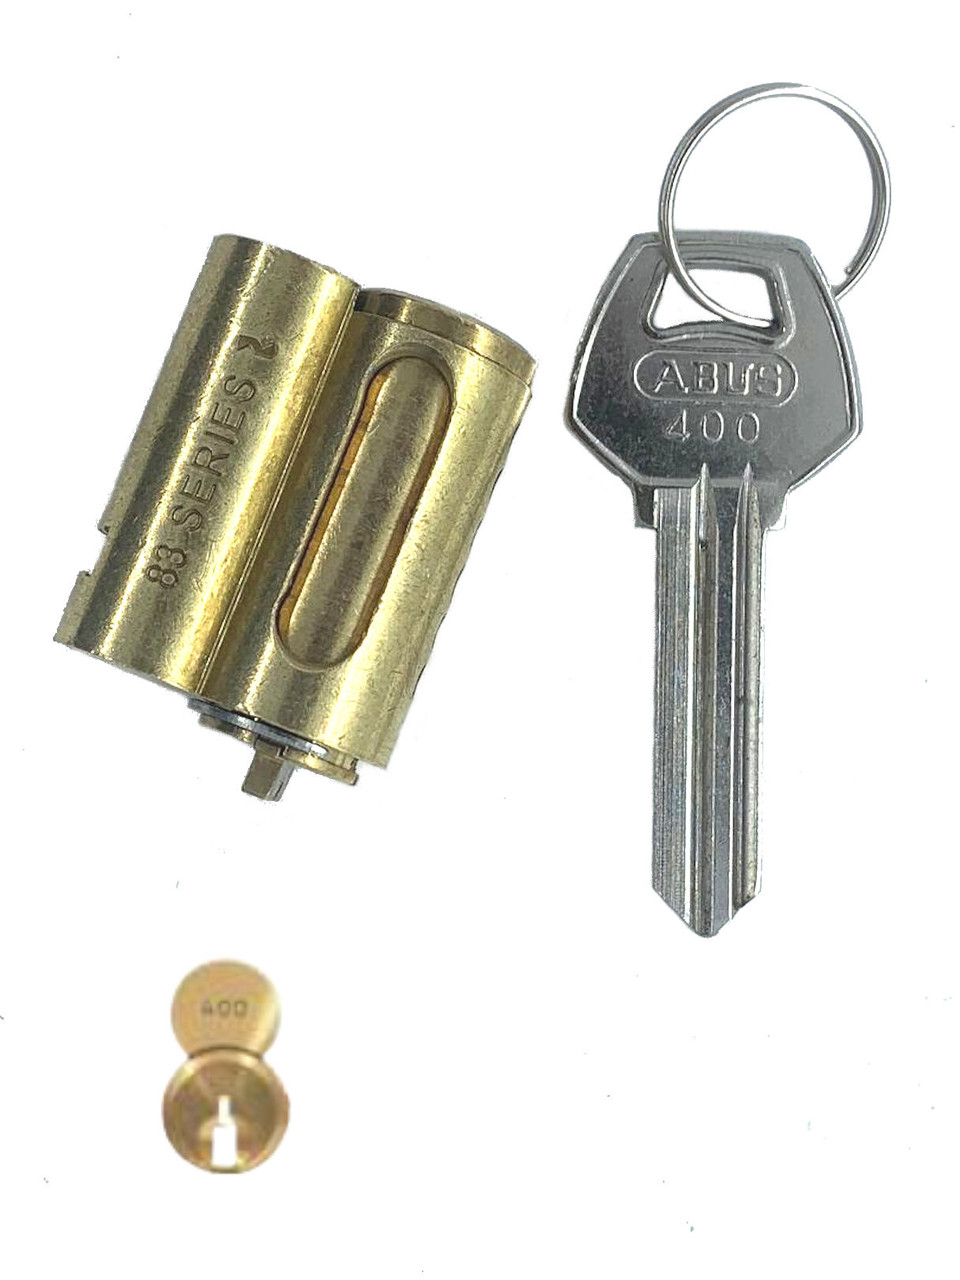 Vintage corbin cylinder cabinet lock with key